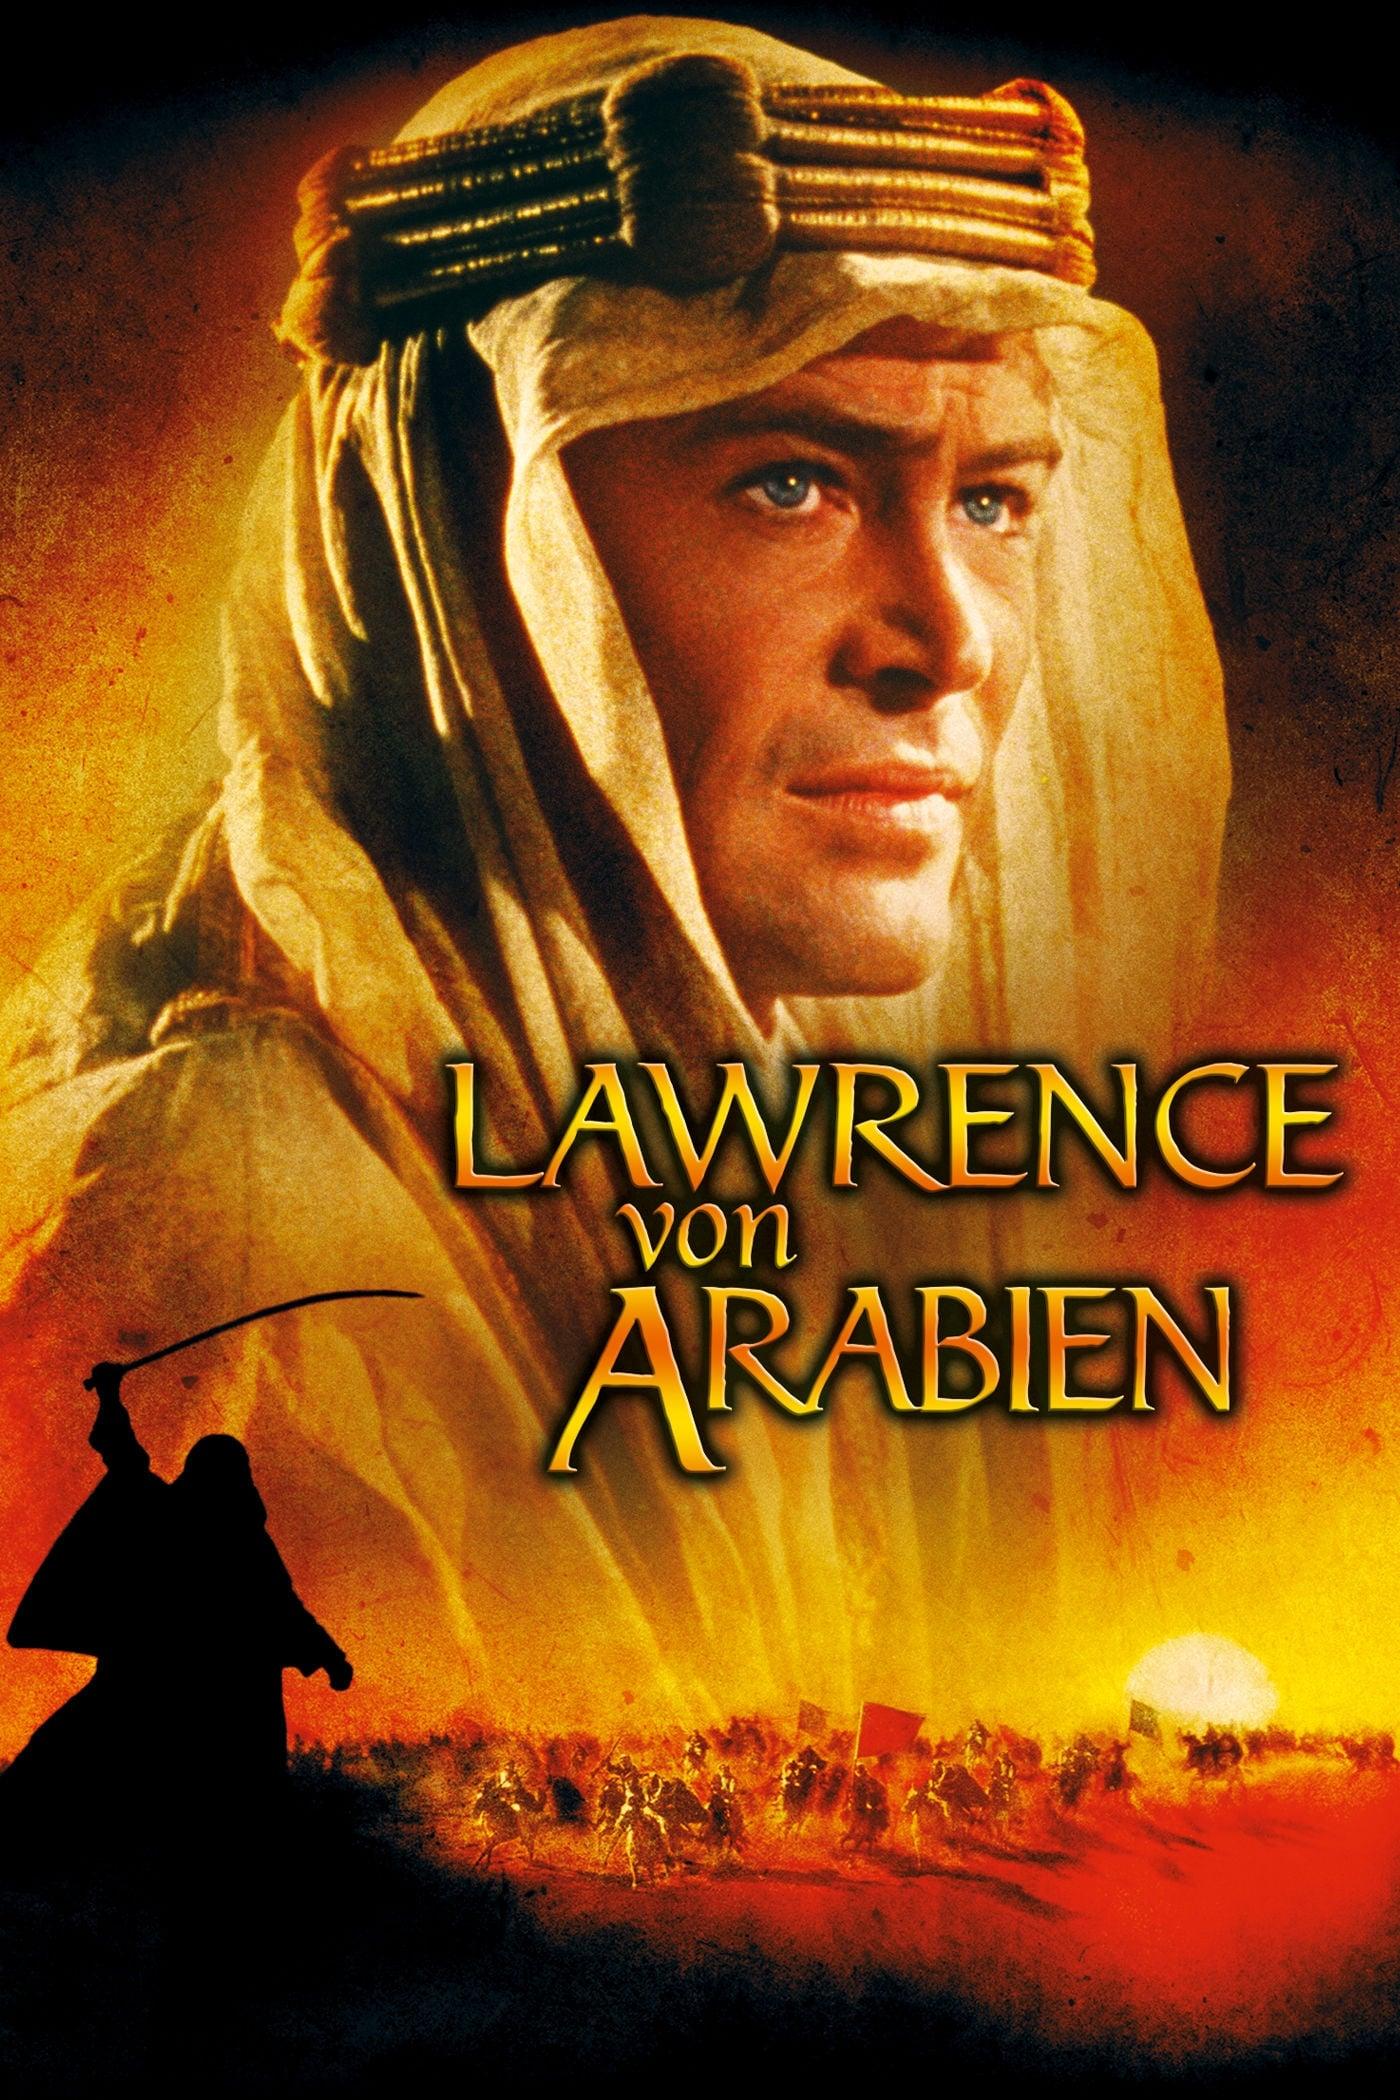 Lawrence von Arabien poster